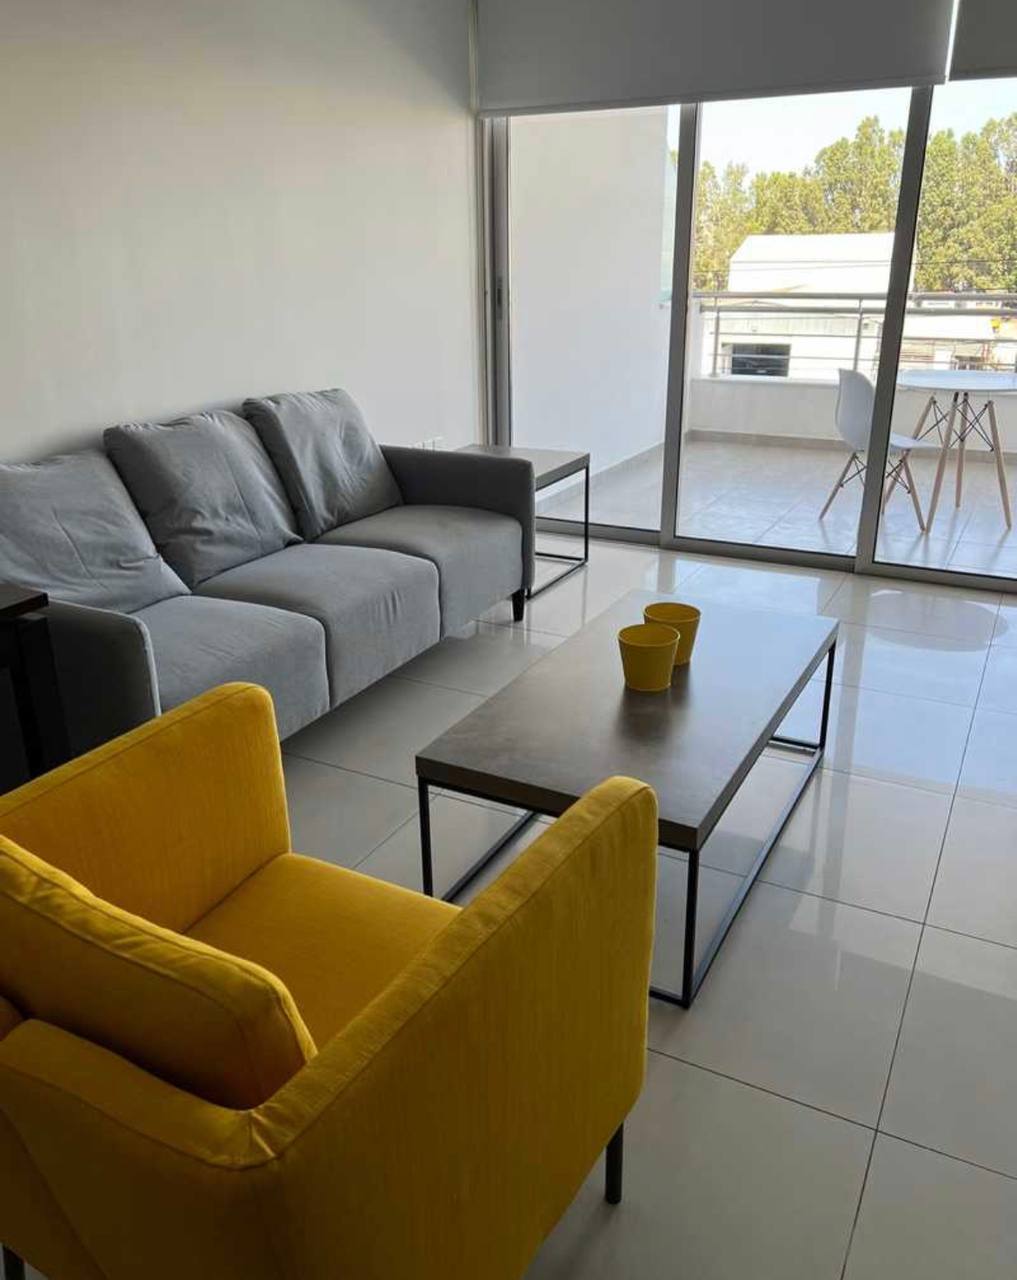 2 Bedroom Apartment for Rent in Larnaca